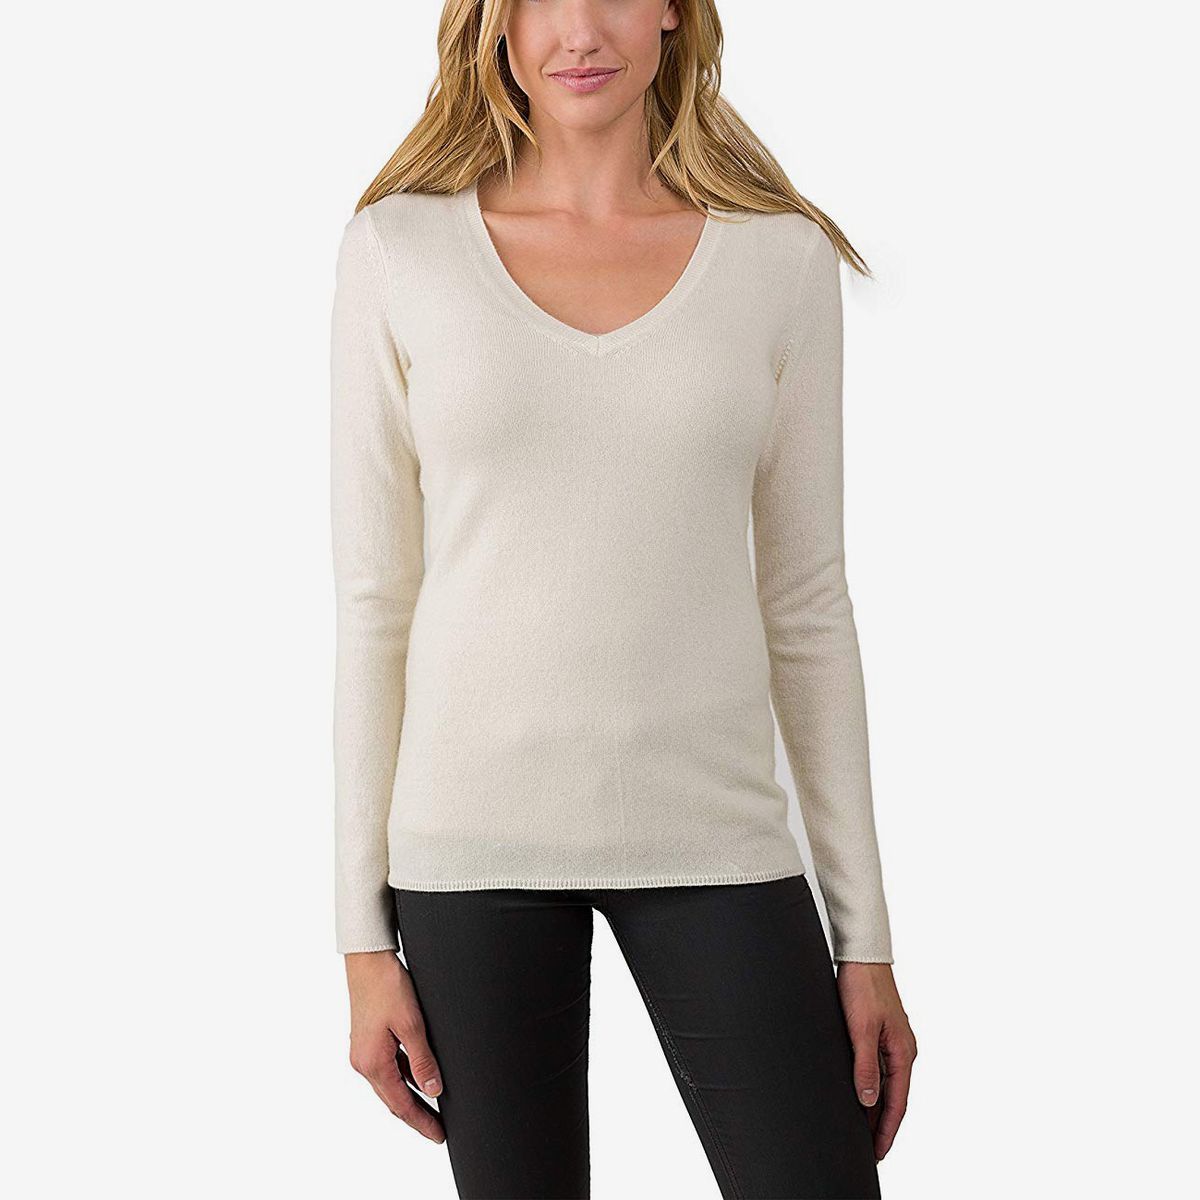 Summer short-sleeve sweater in modern beige pink